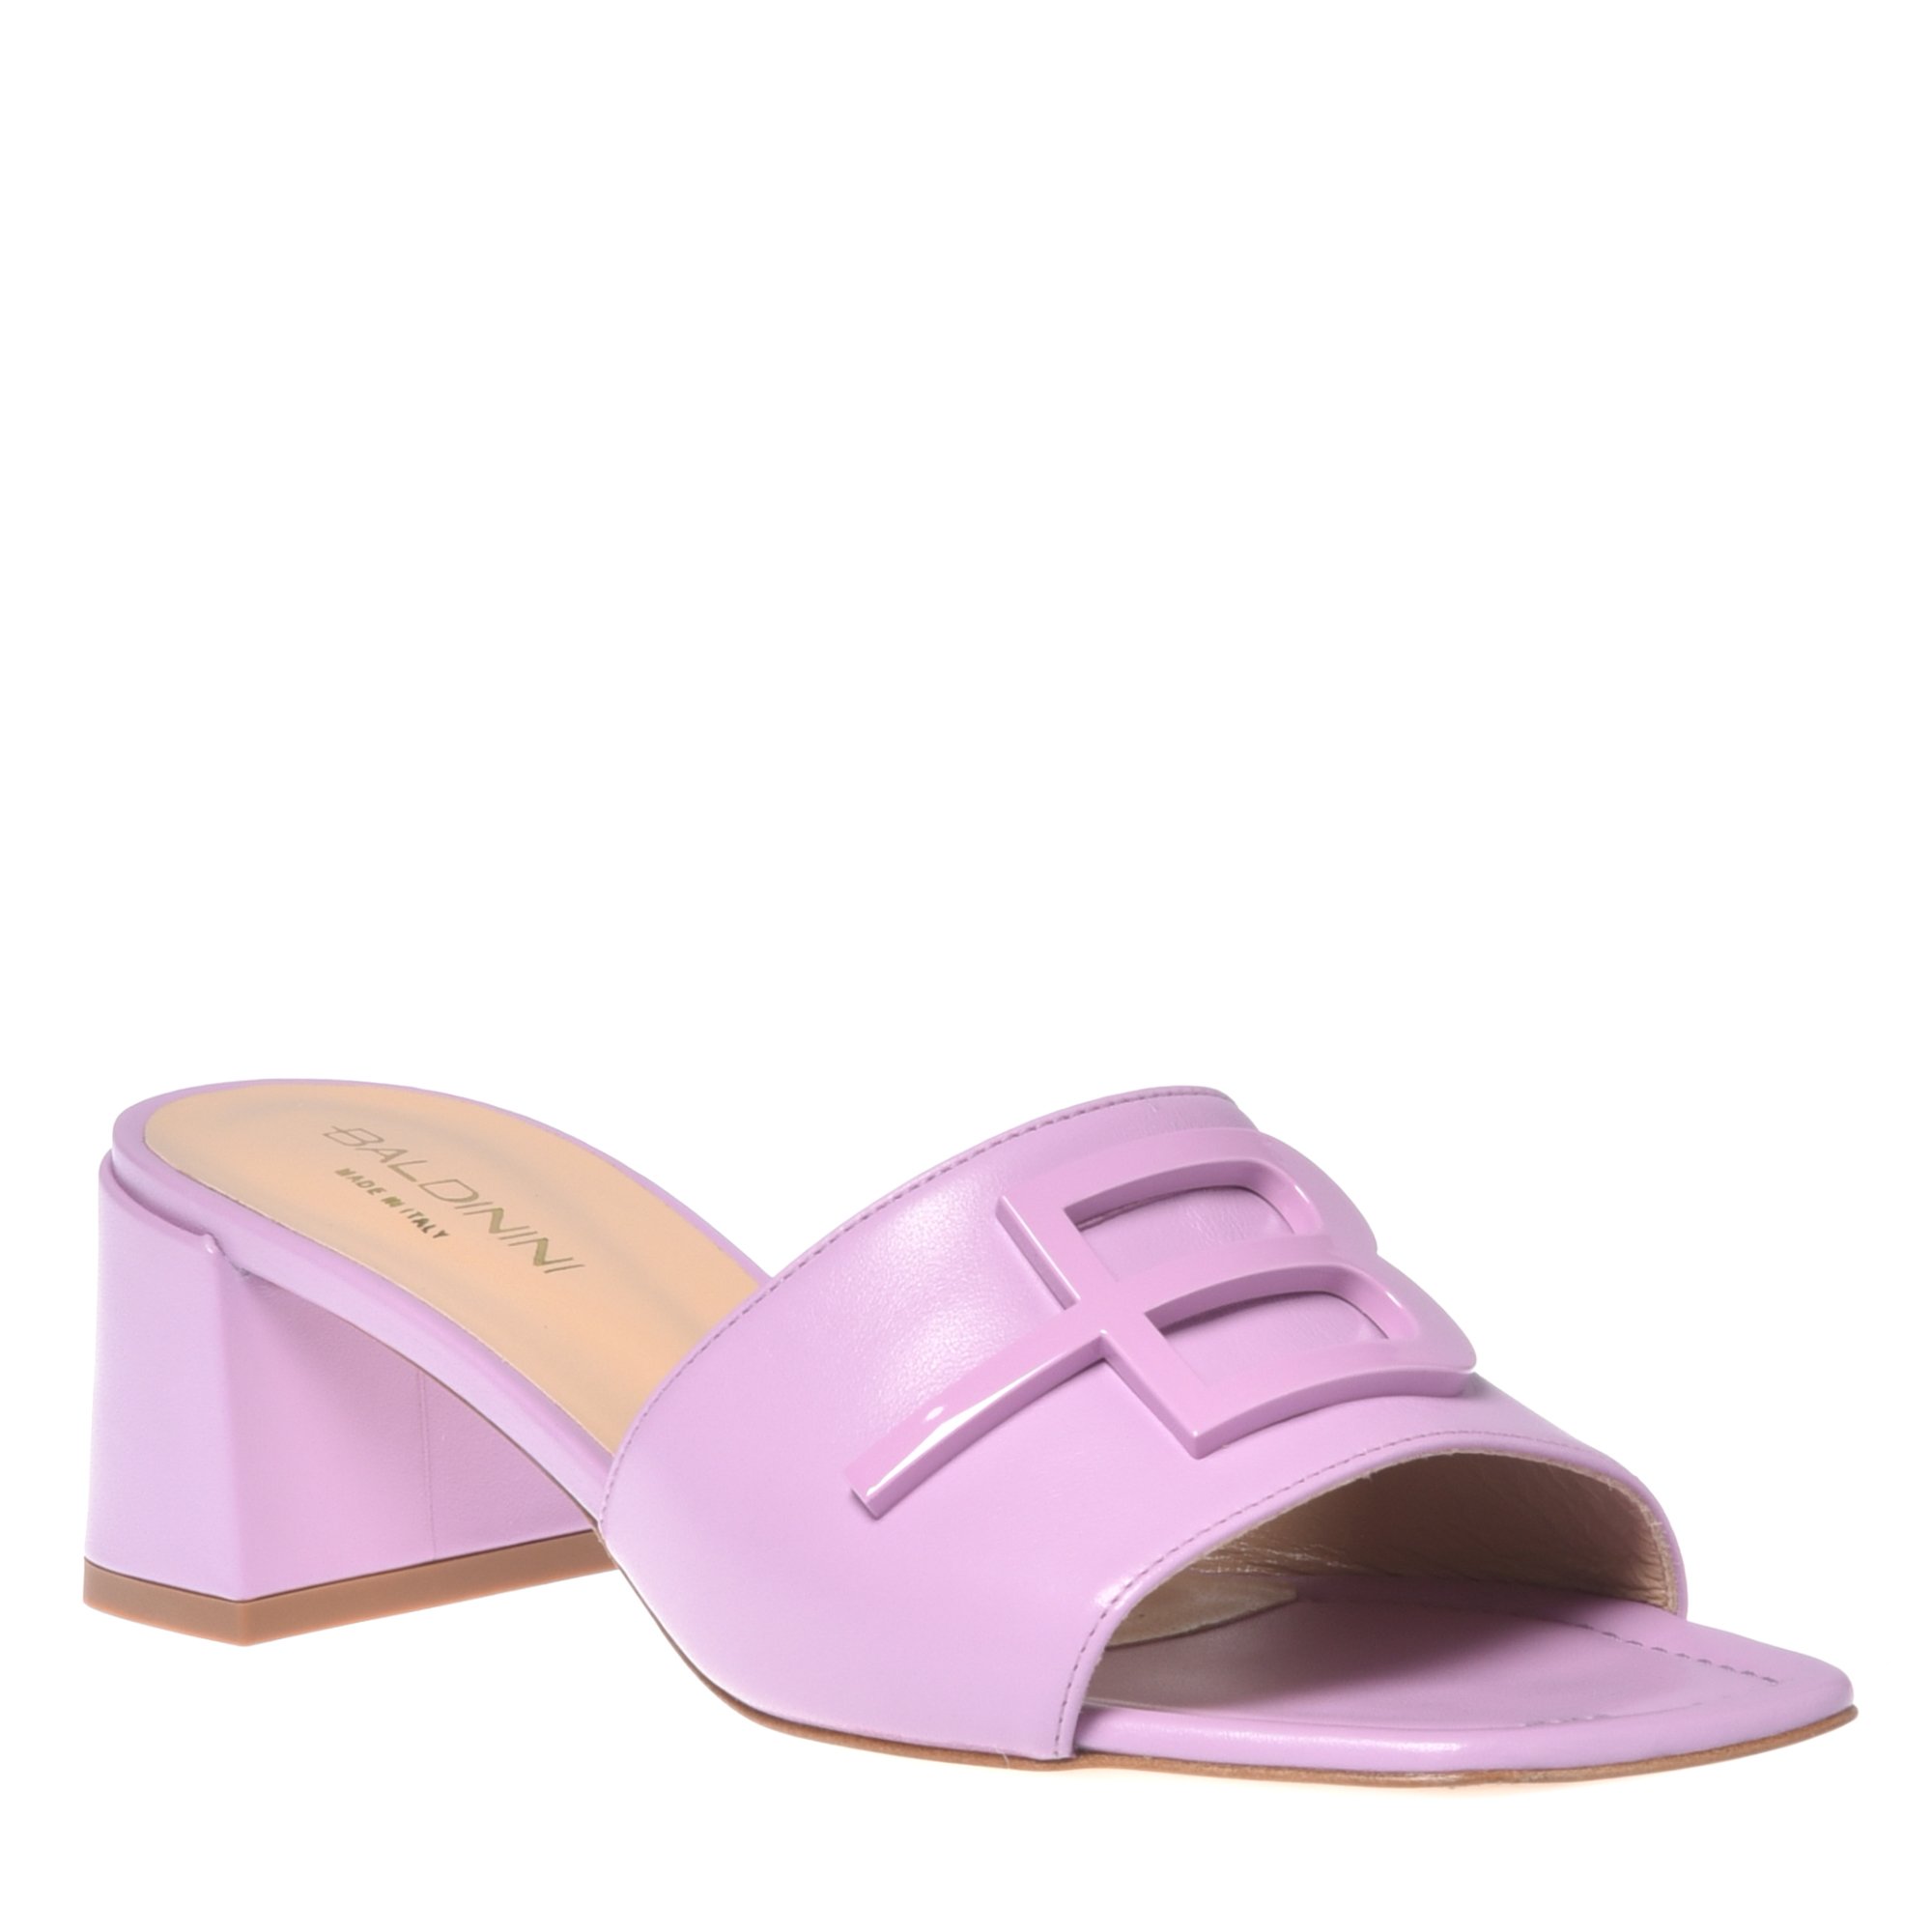 Court shoe in lilac calfskin image